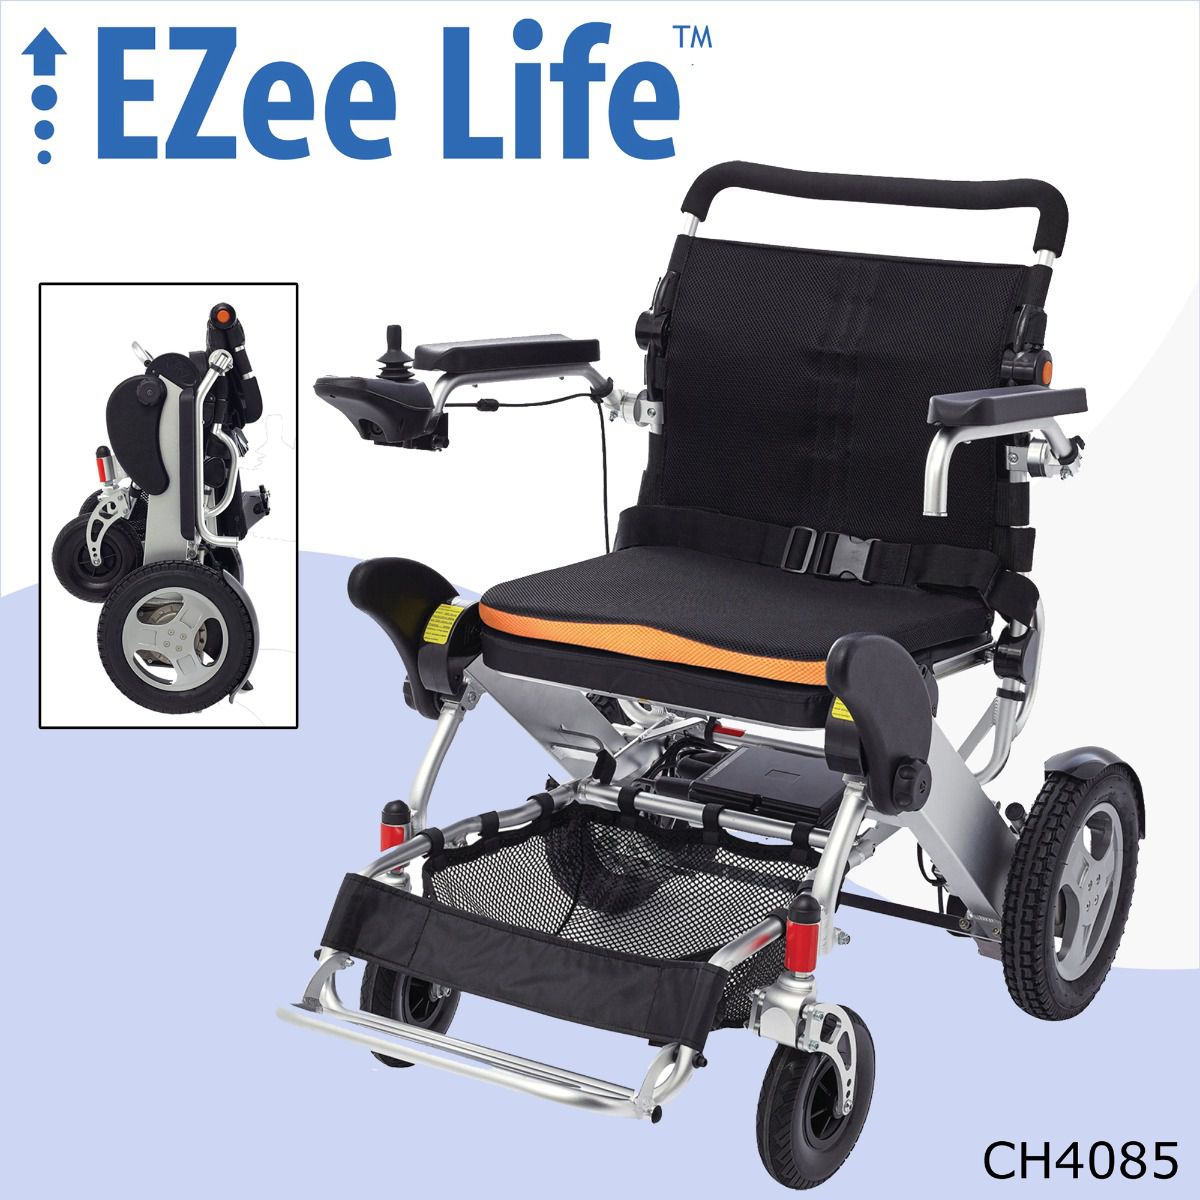 Ezee Life™ - 3G Folding Electric Wheelchair